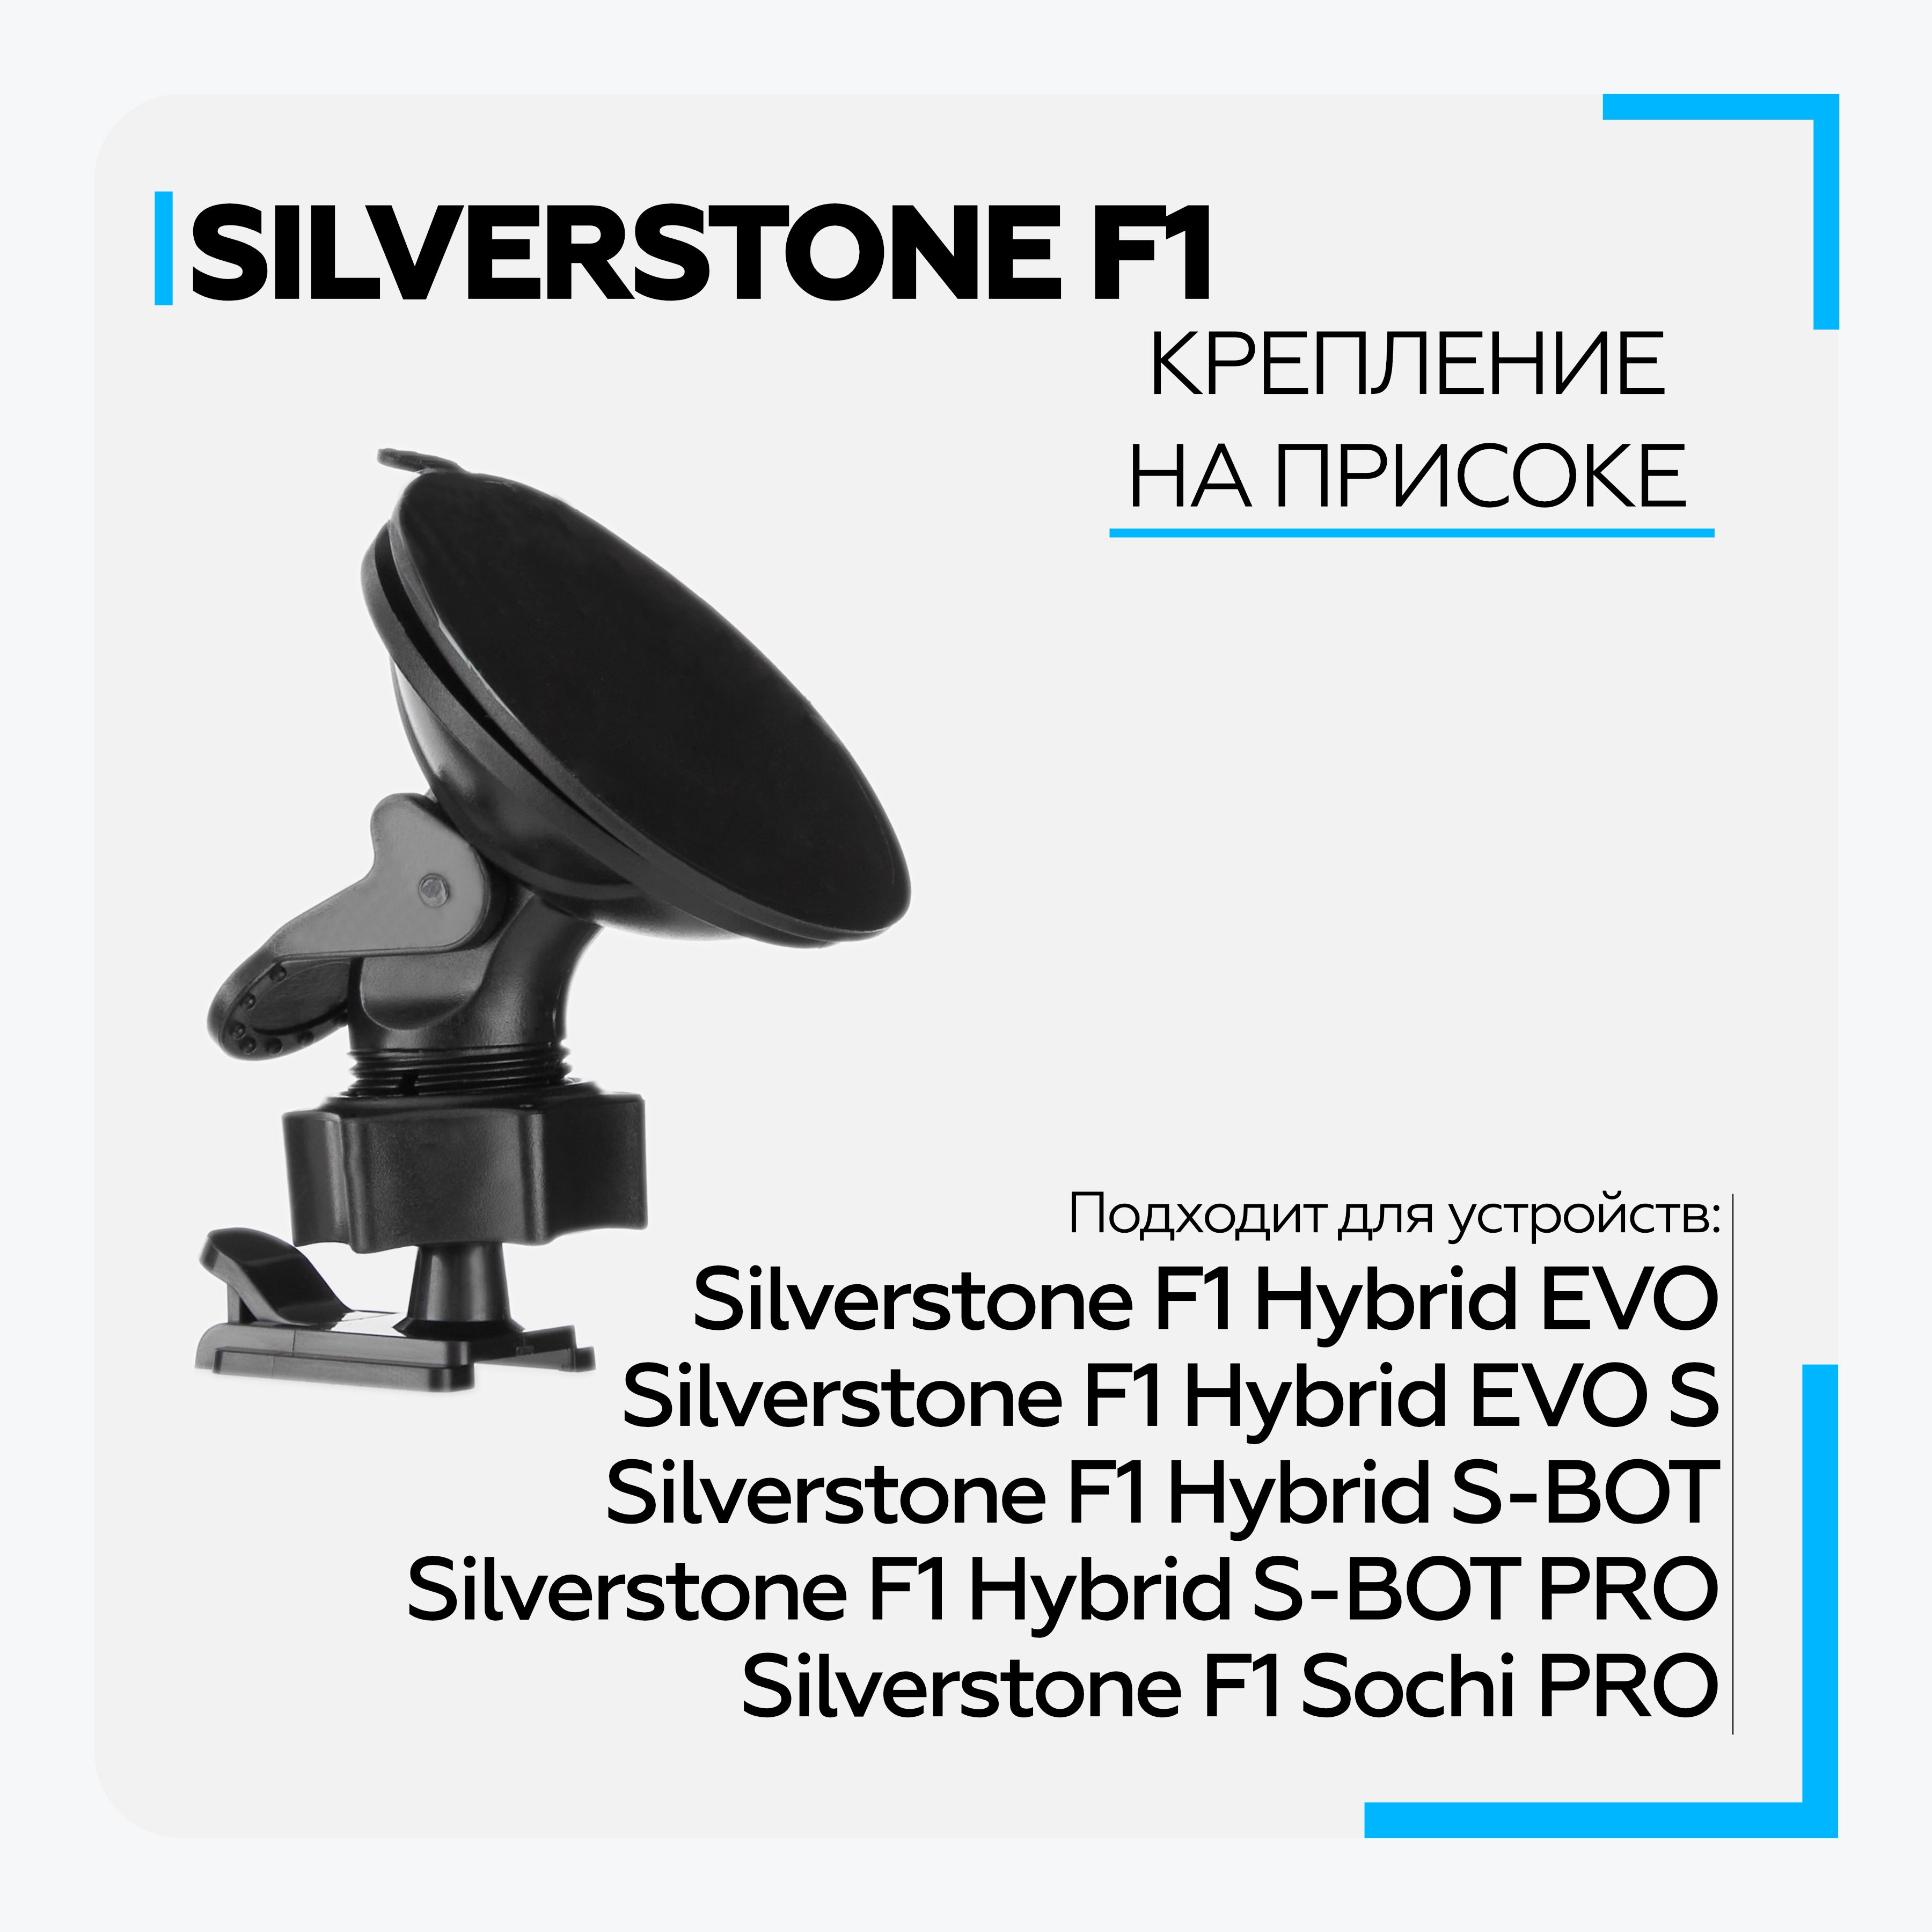 Silverstone vt02. Крепление Sochi Pro Silverstone f1. Комбо-устройство Silverstone f1 Hybrid EVO S. Silverstone f1 Sochi Pro. Hybrid evo pro